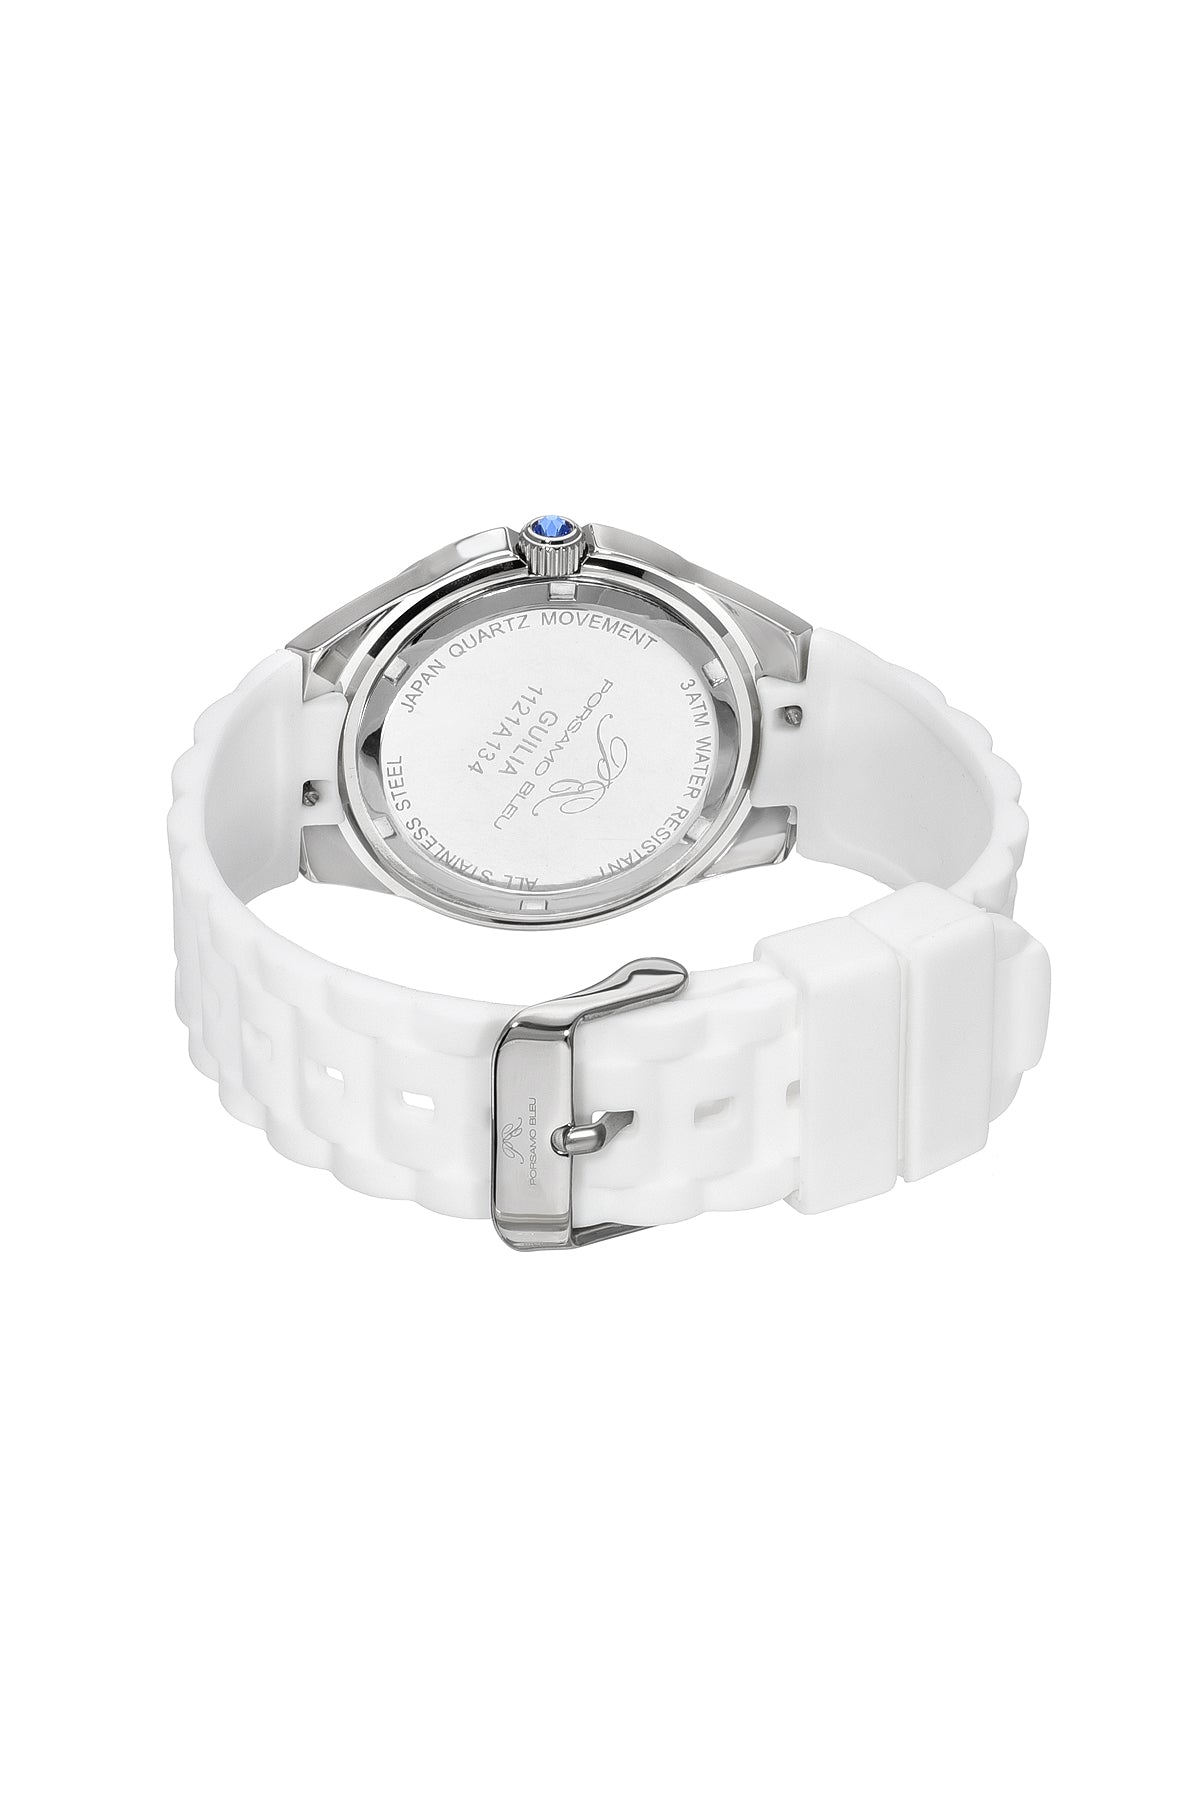 Porsamo Bleu Guilia Luxury Women's Stainless Steel Watch, Interchangeable Bands, Silver, White 1121AGUS